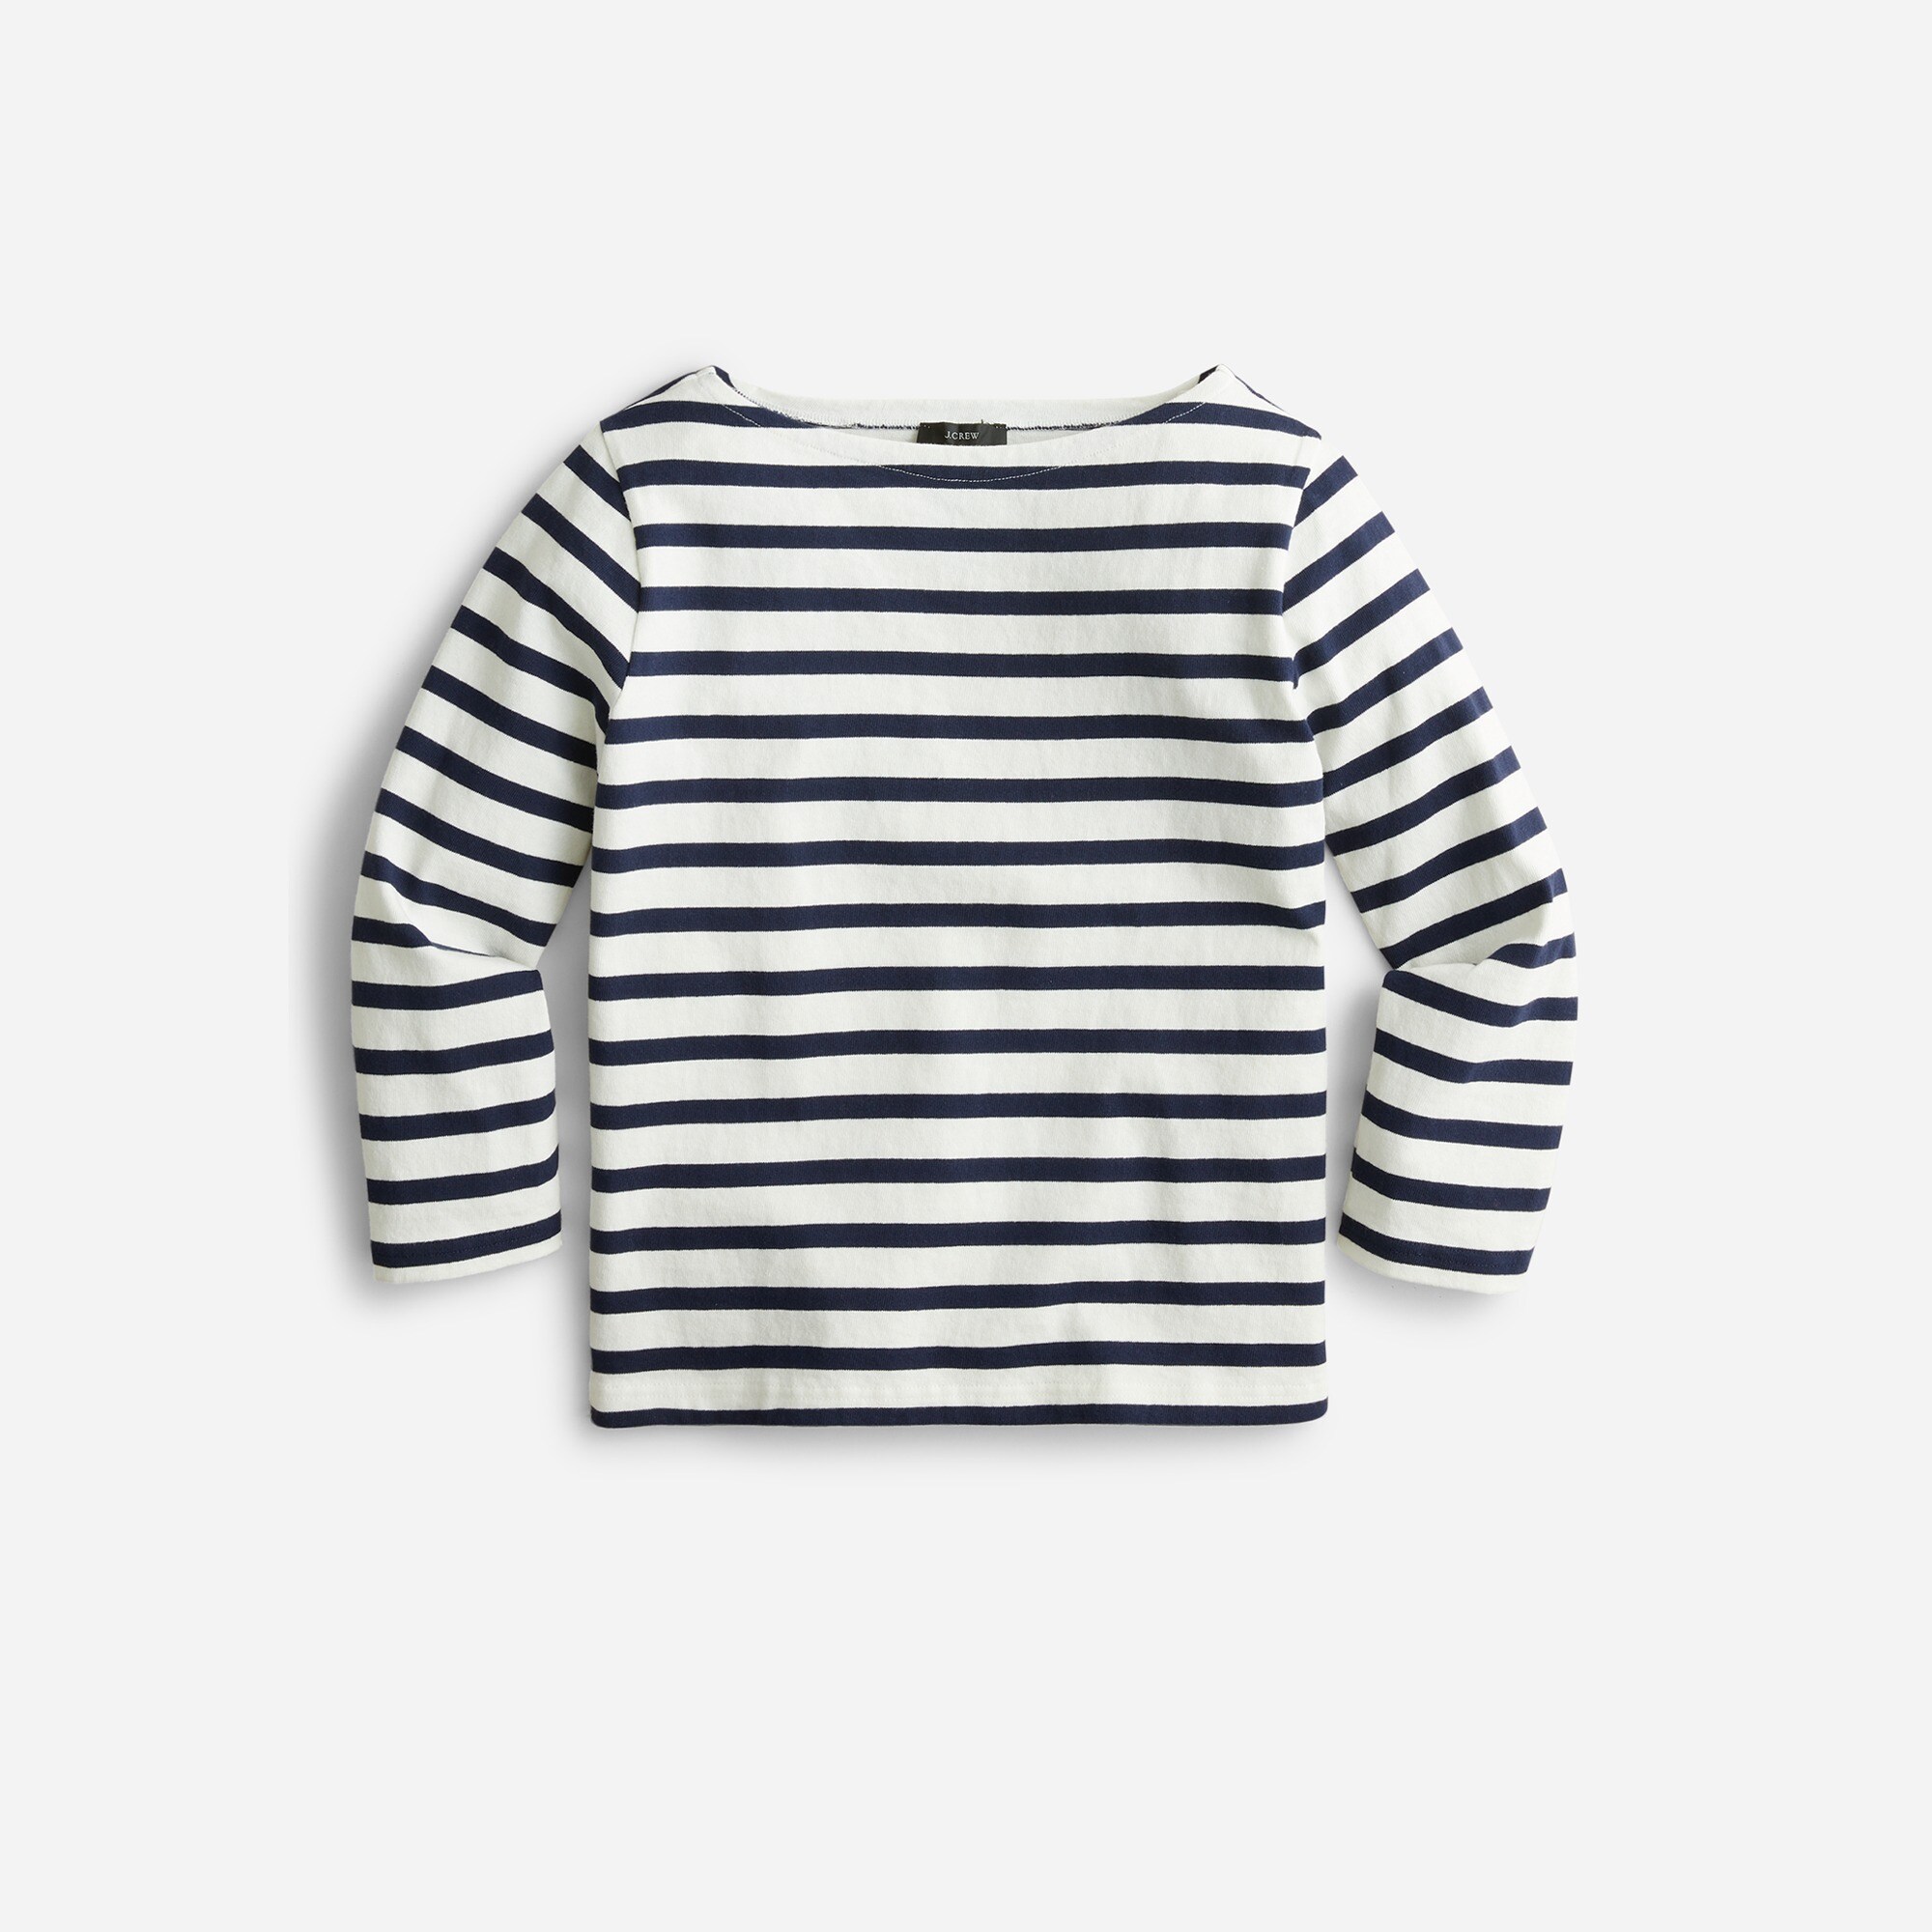  Classic mariner boatneck T-shirt in stripe